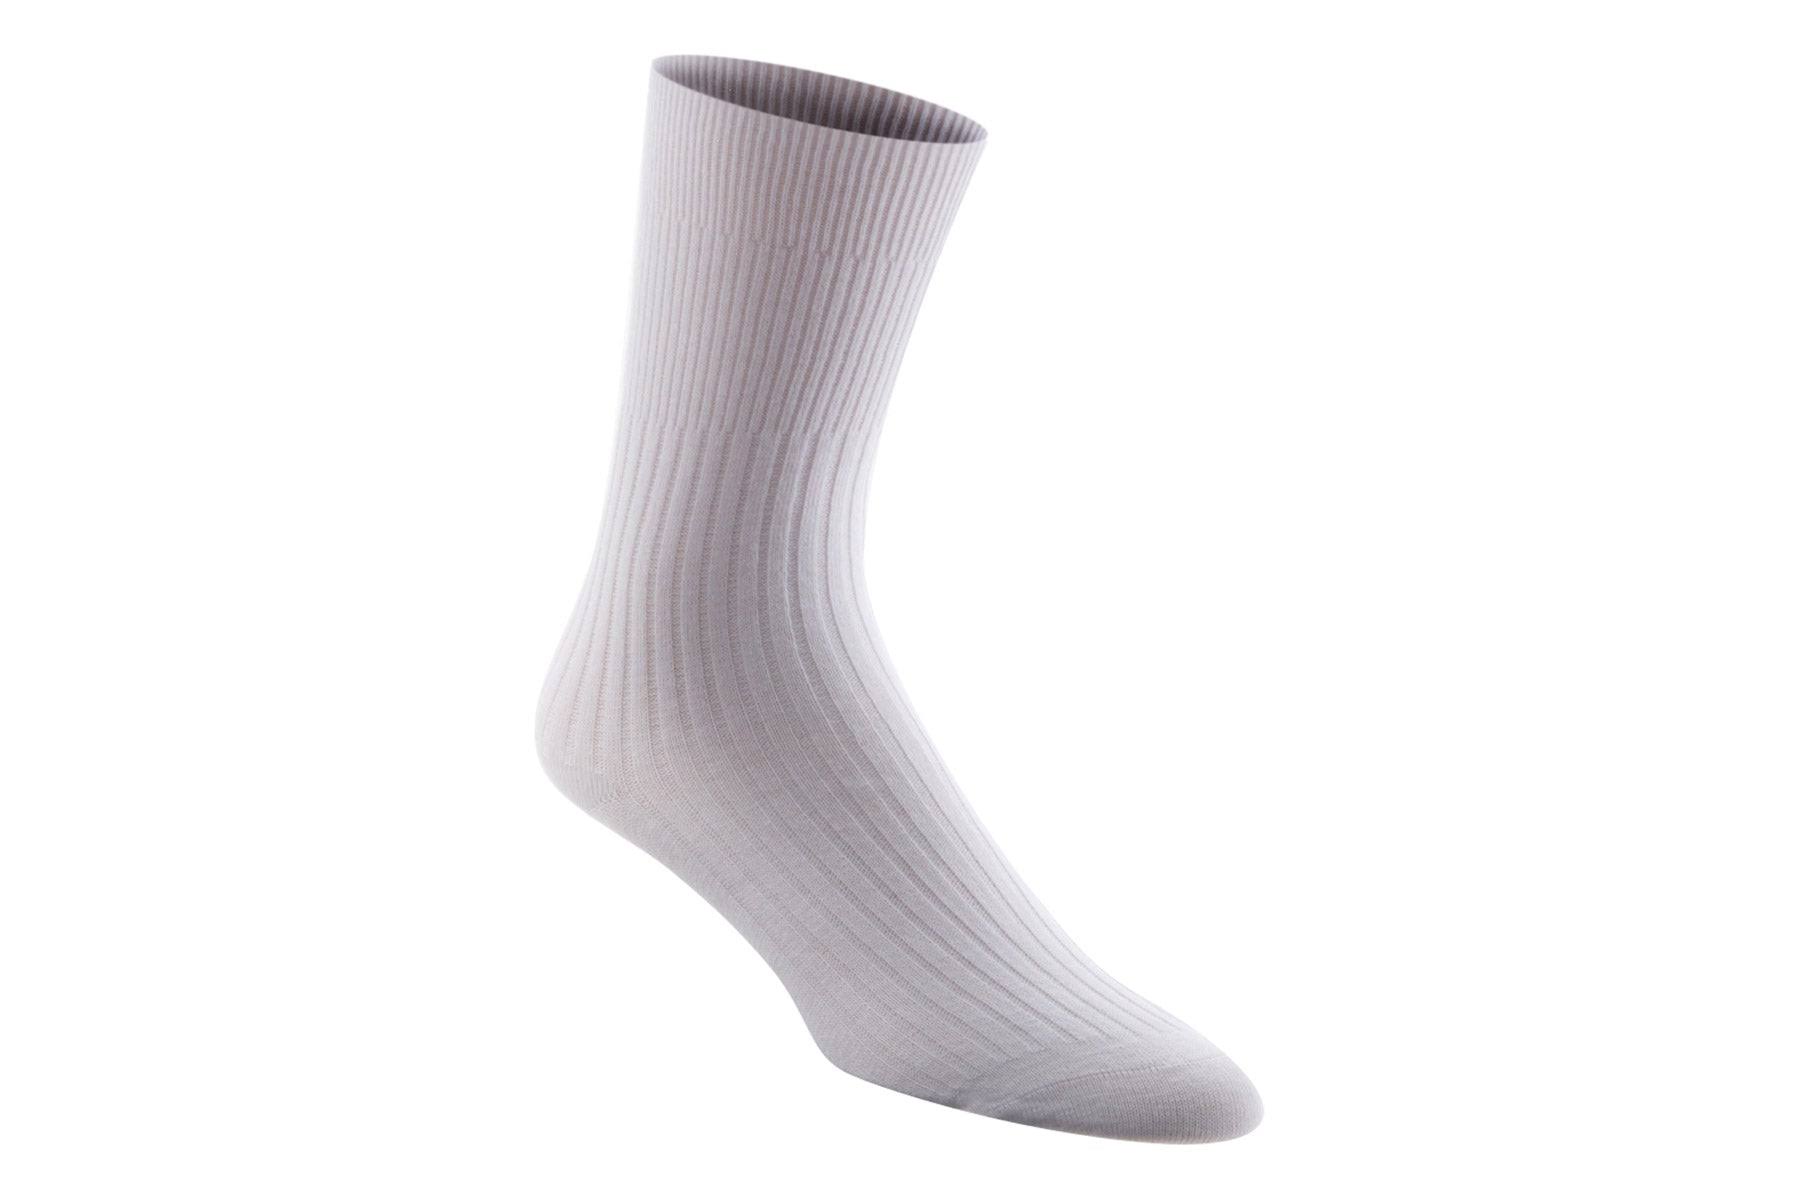 Simcan Men's & Women's Casual Comfort Mid Calf Socks - Medium